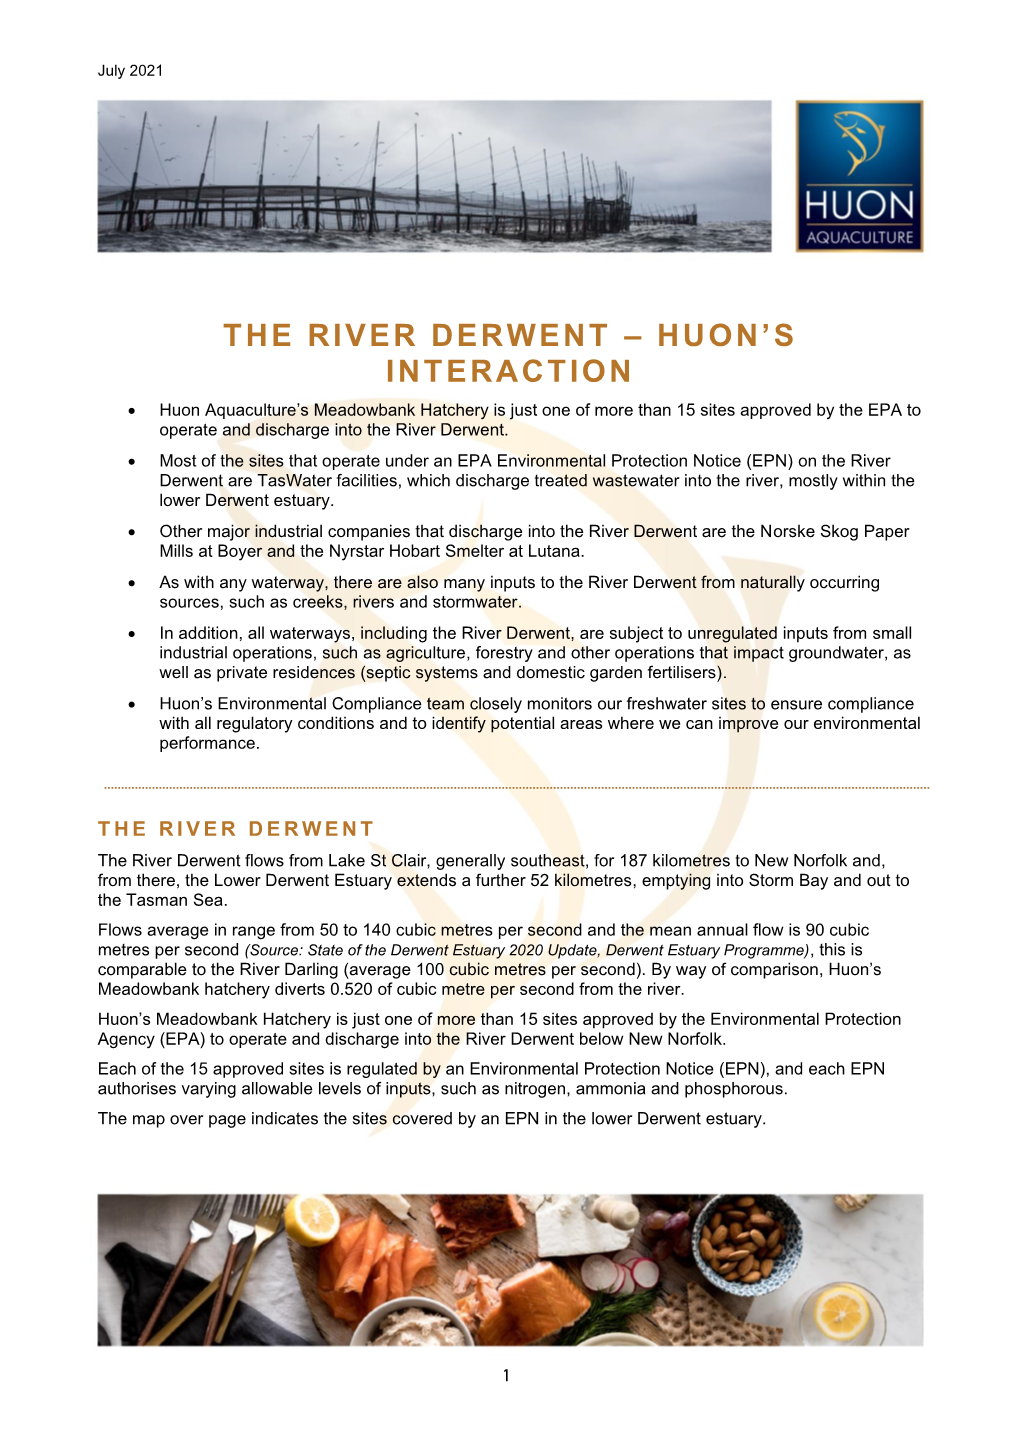 The River Derwent – Huon's Interaction